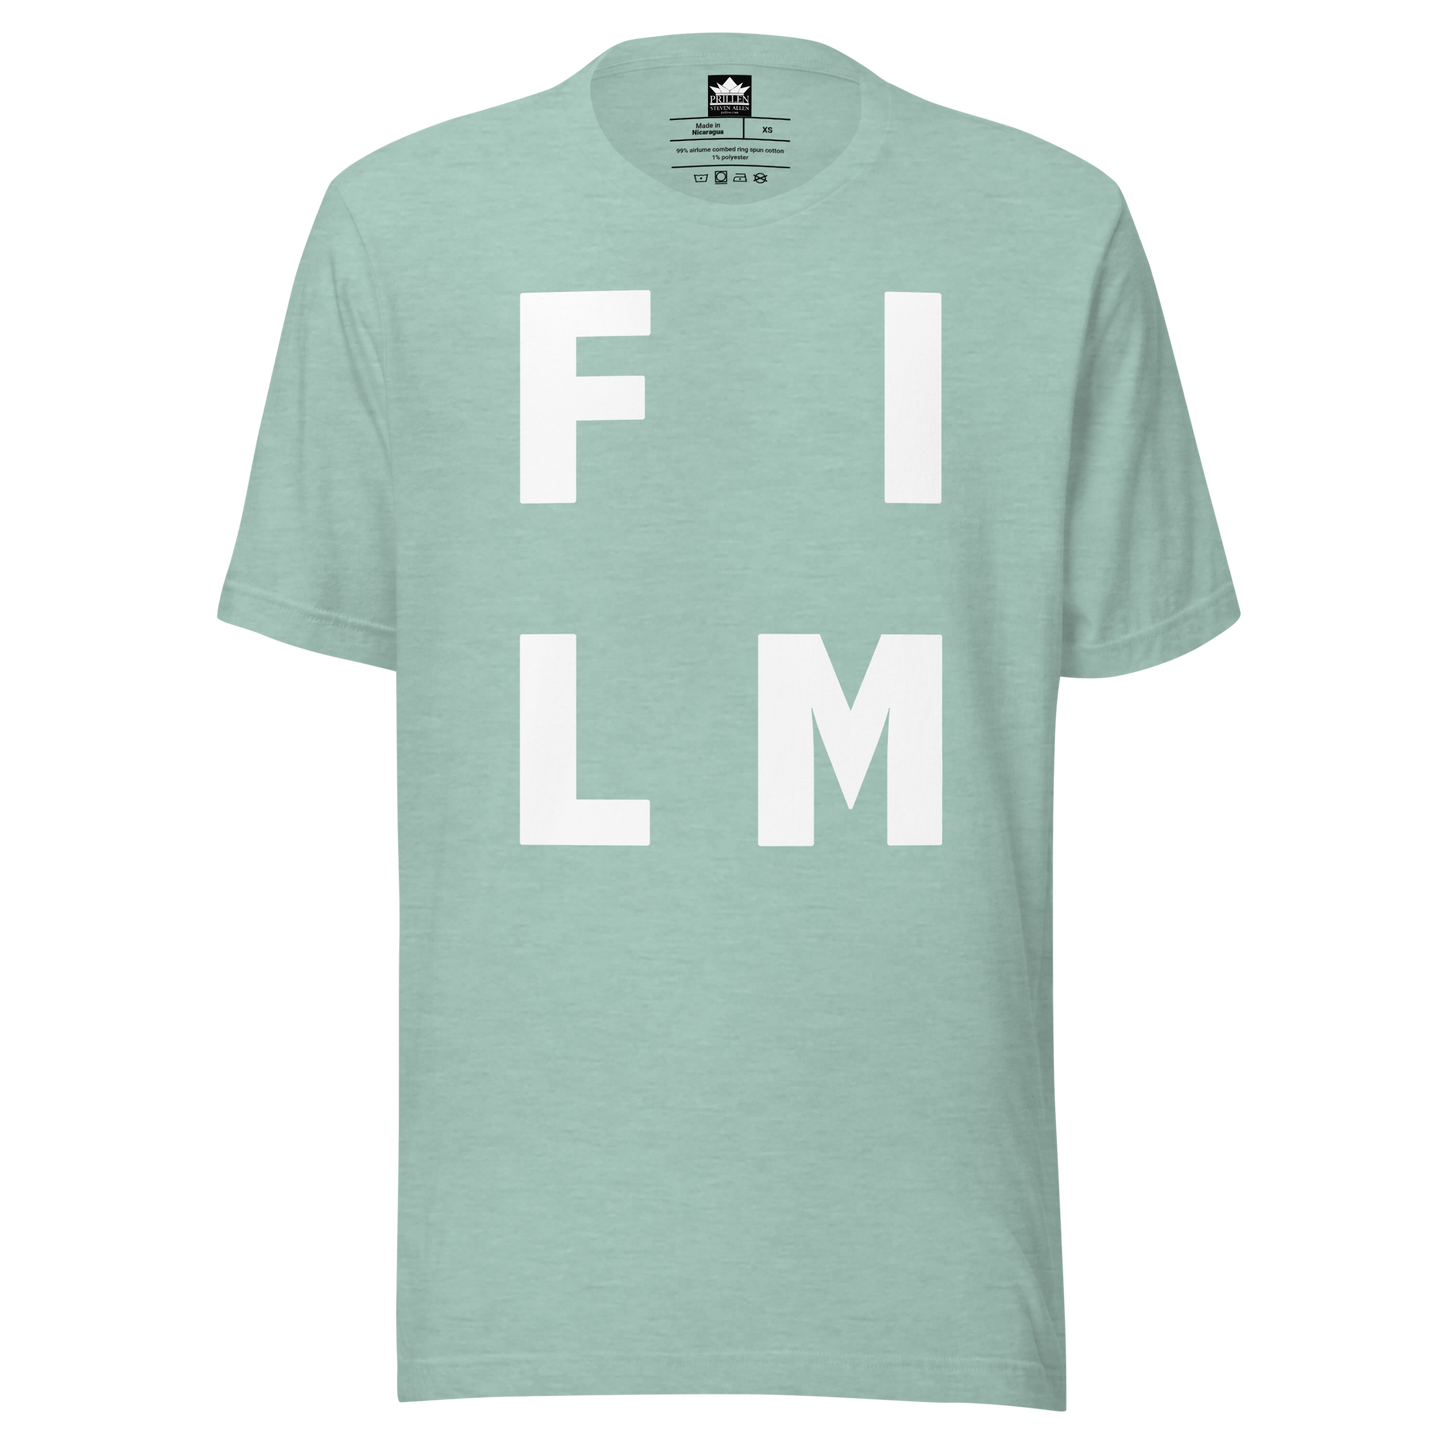 Prillen Film T-Shirt